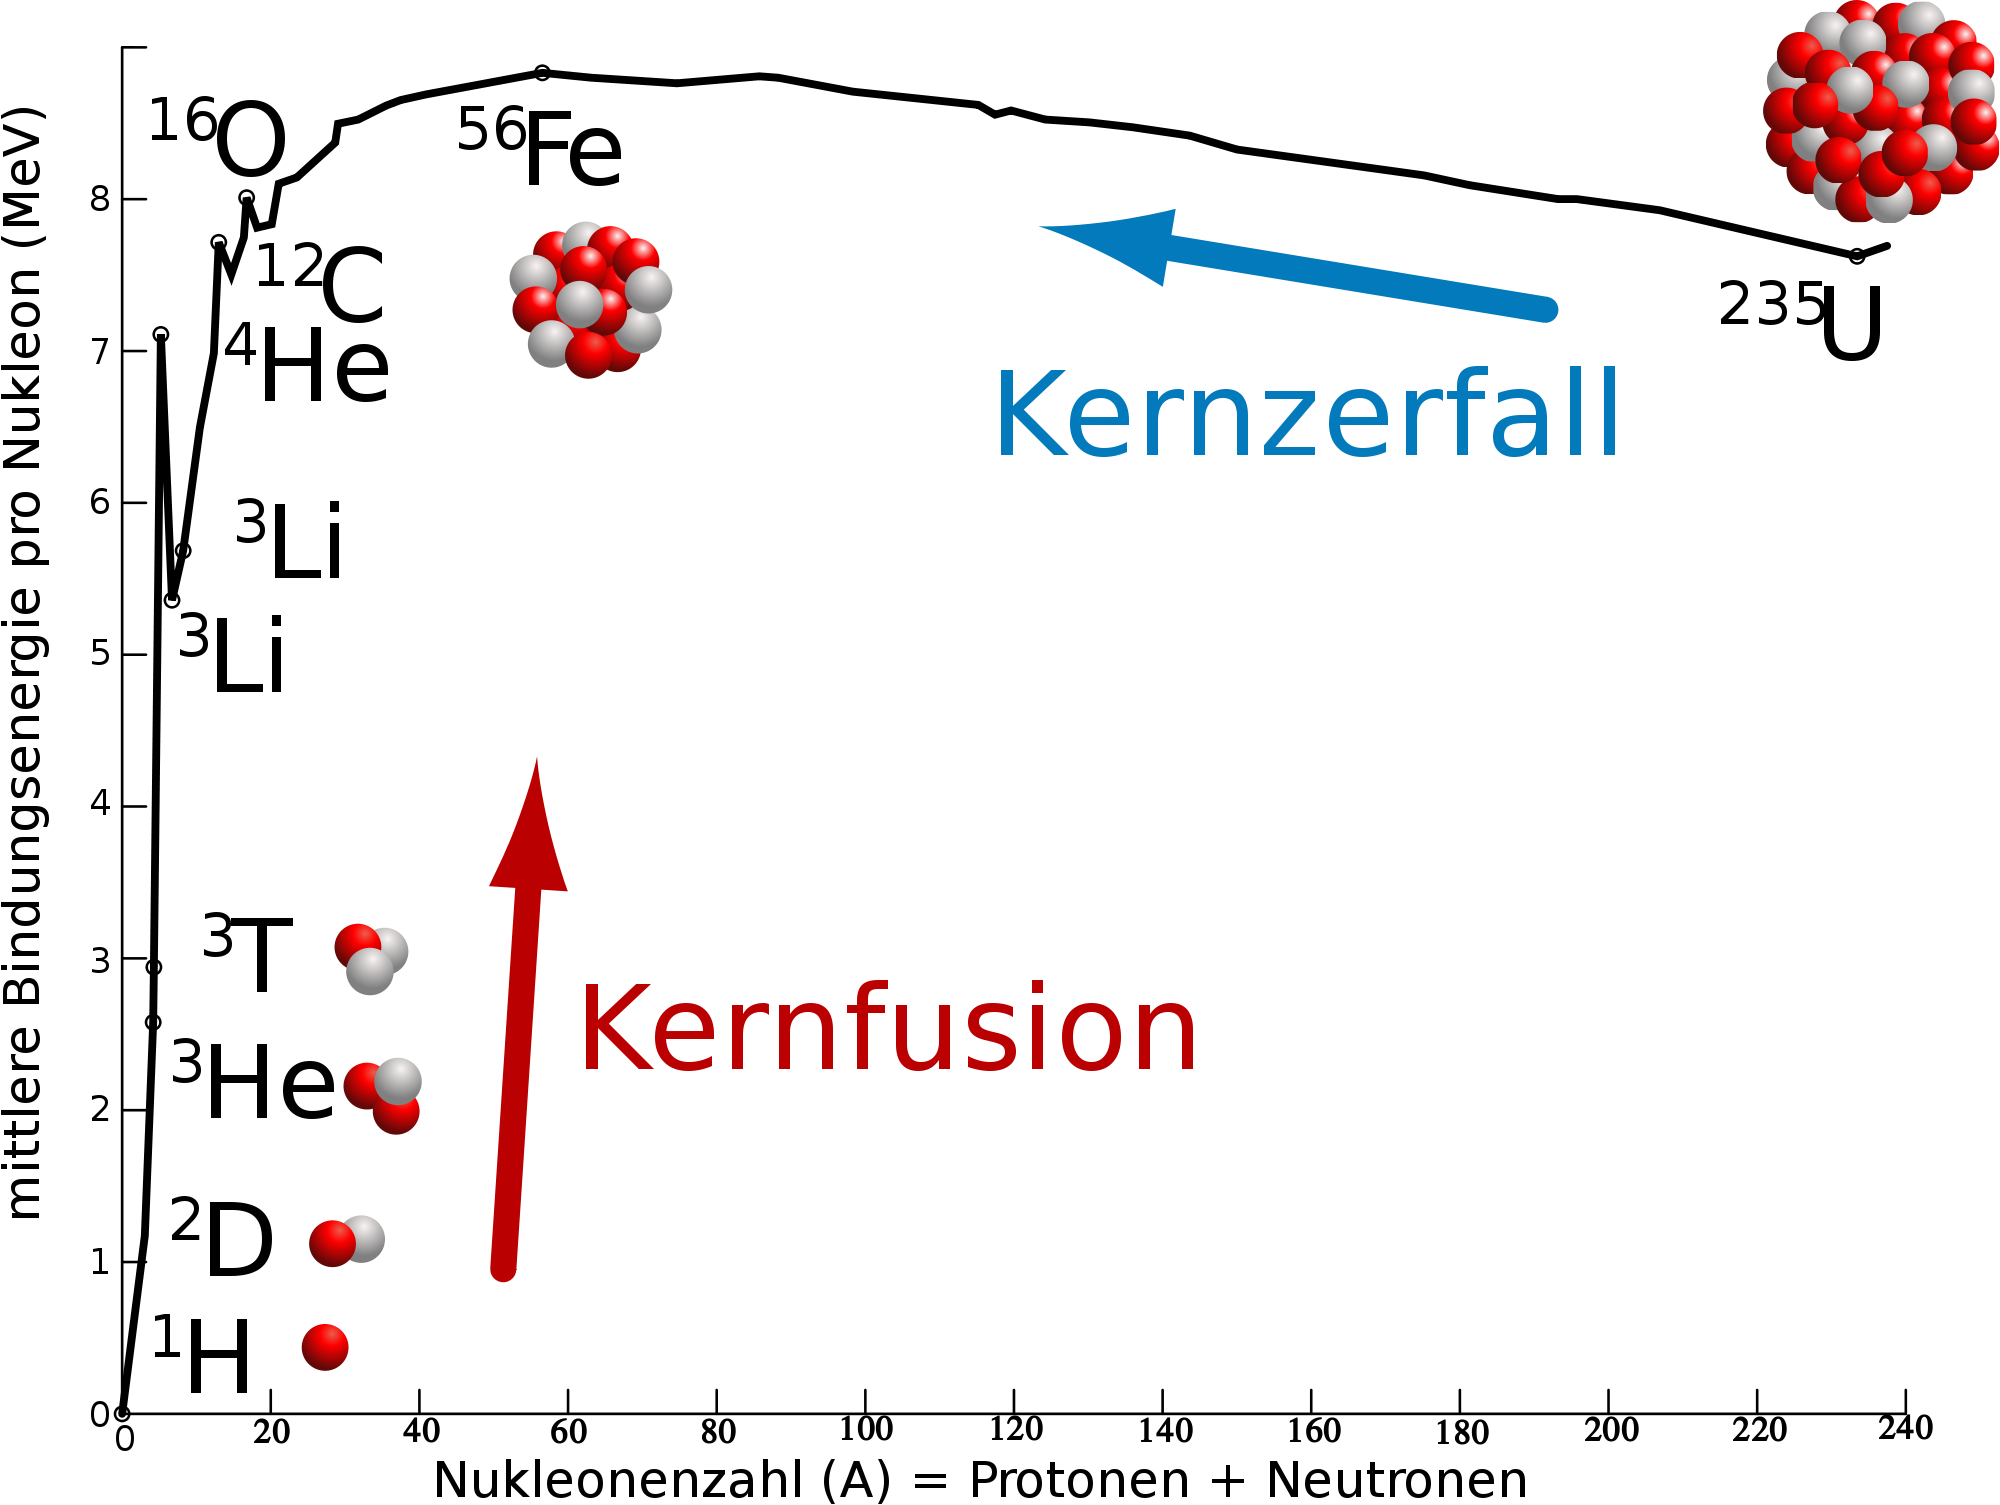 Kernfusion